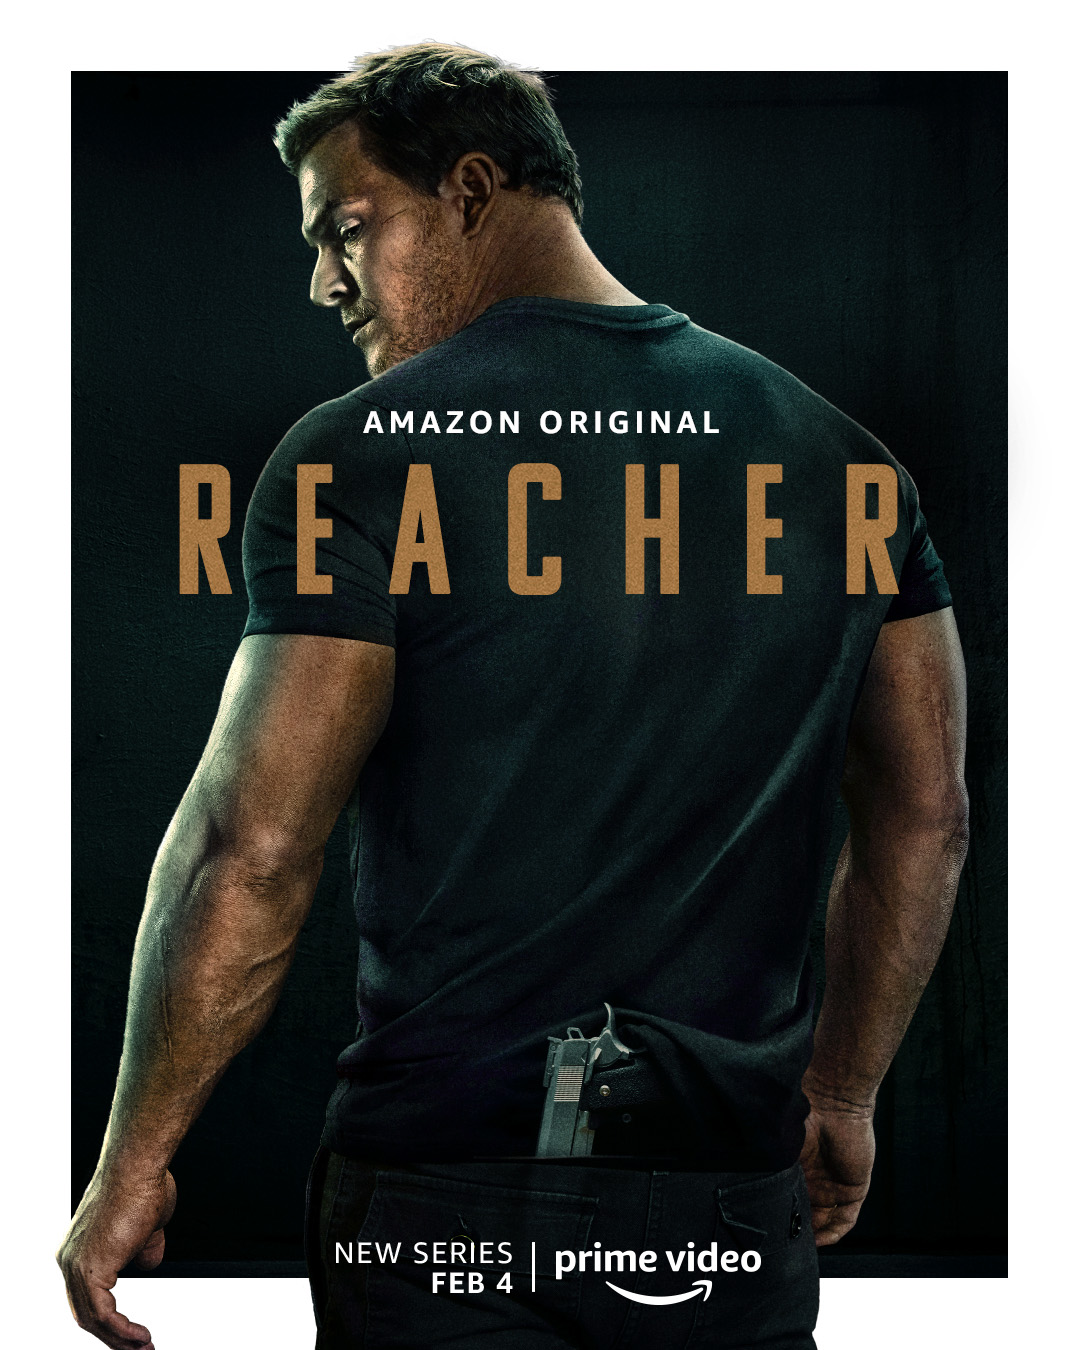 Reacher Schriftzug auf dem Poster zurAmazon Original Serie